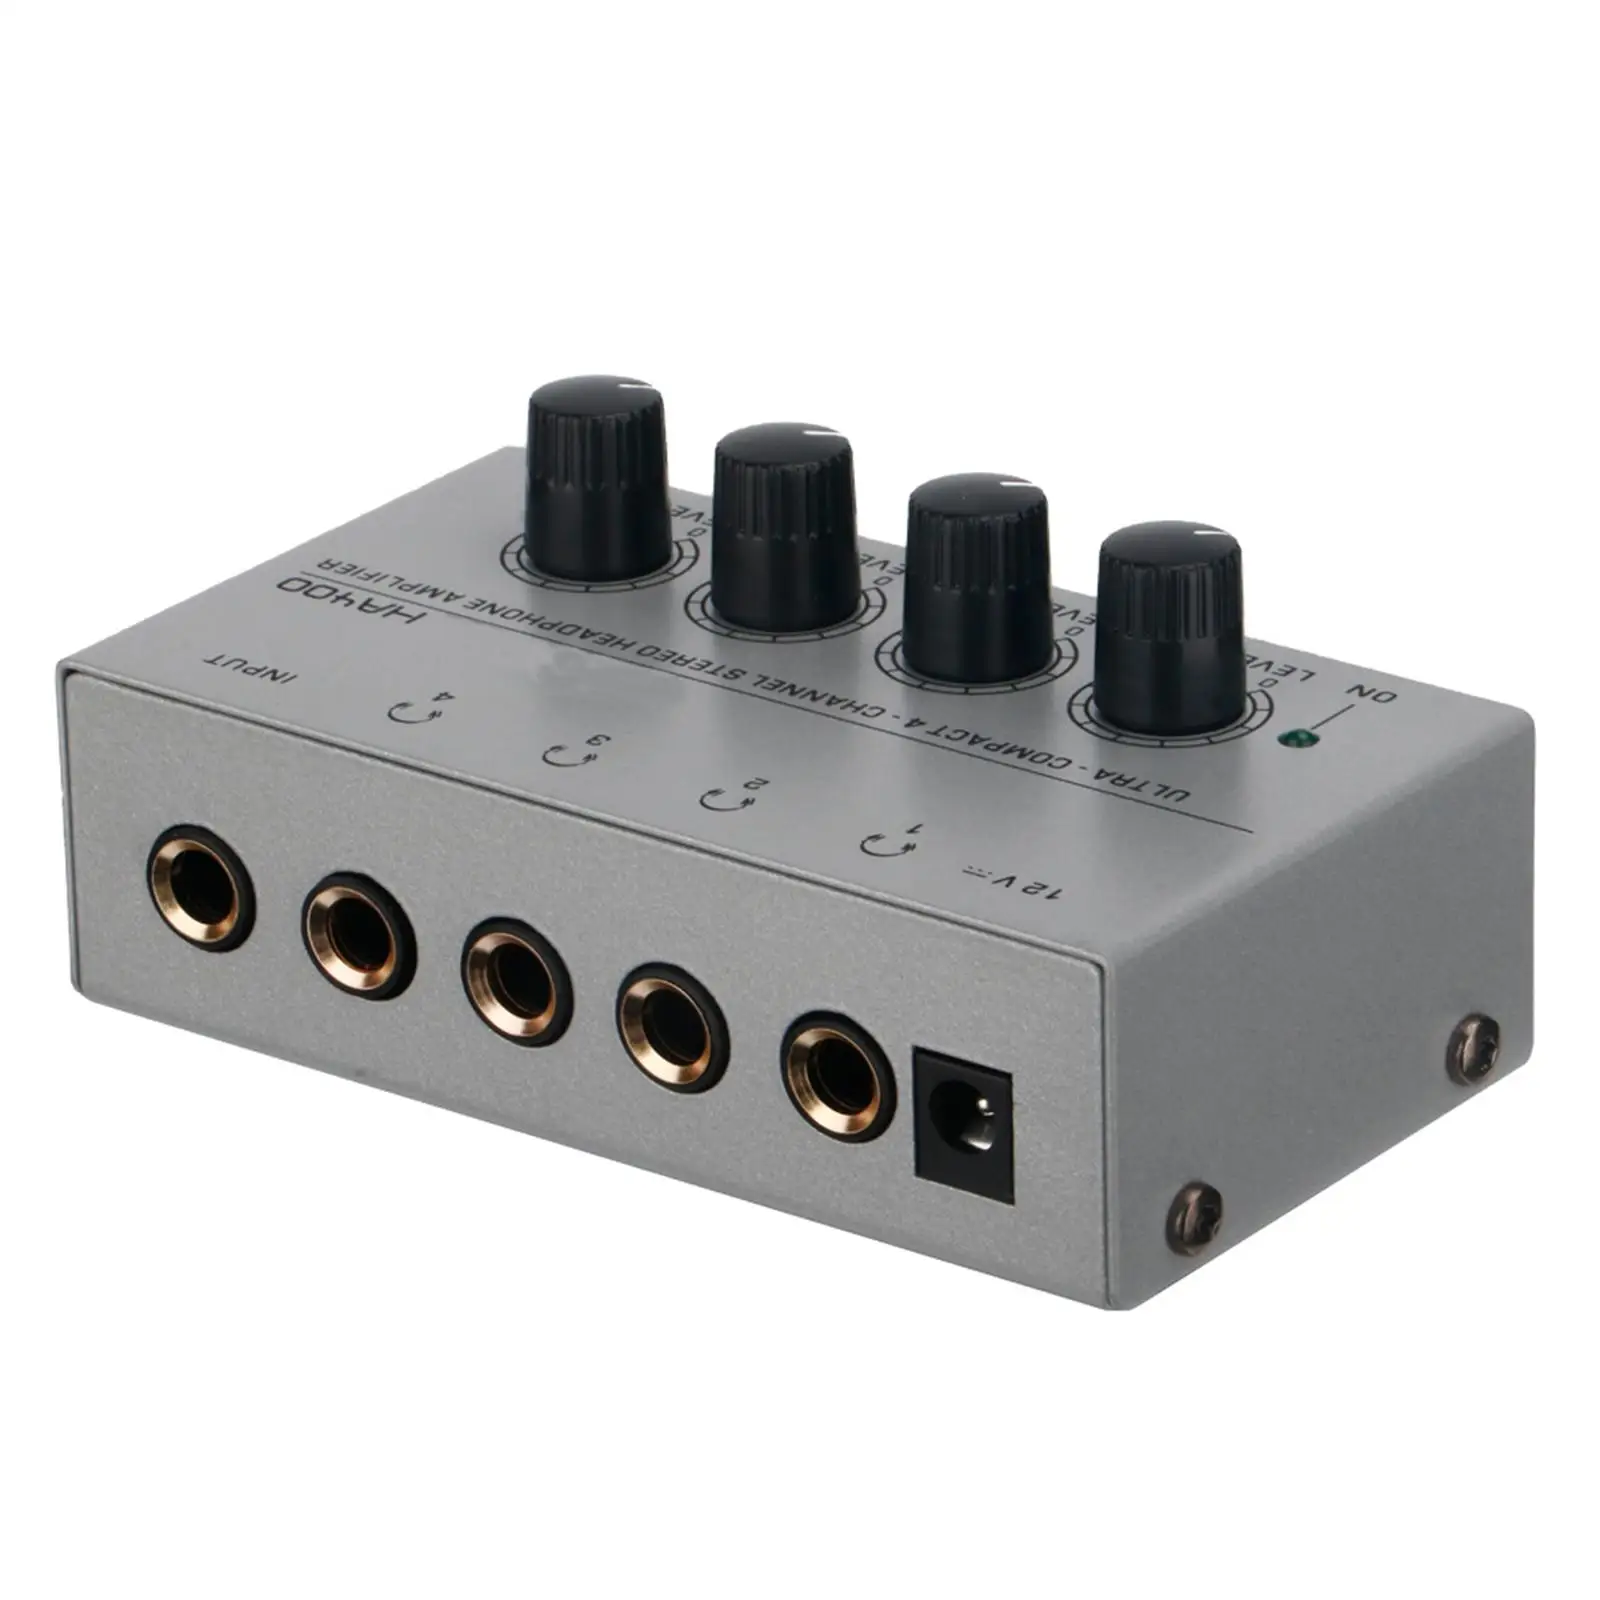 4 Channel Headphone Amp Desktop Amp Stereo Sound Mixer Professional Compact for sound Reinforcement studio Recording